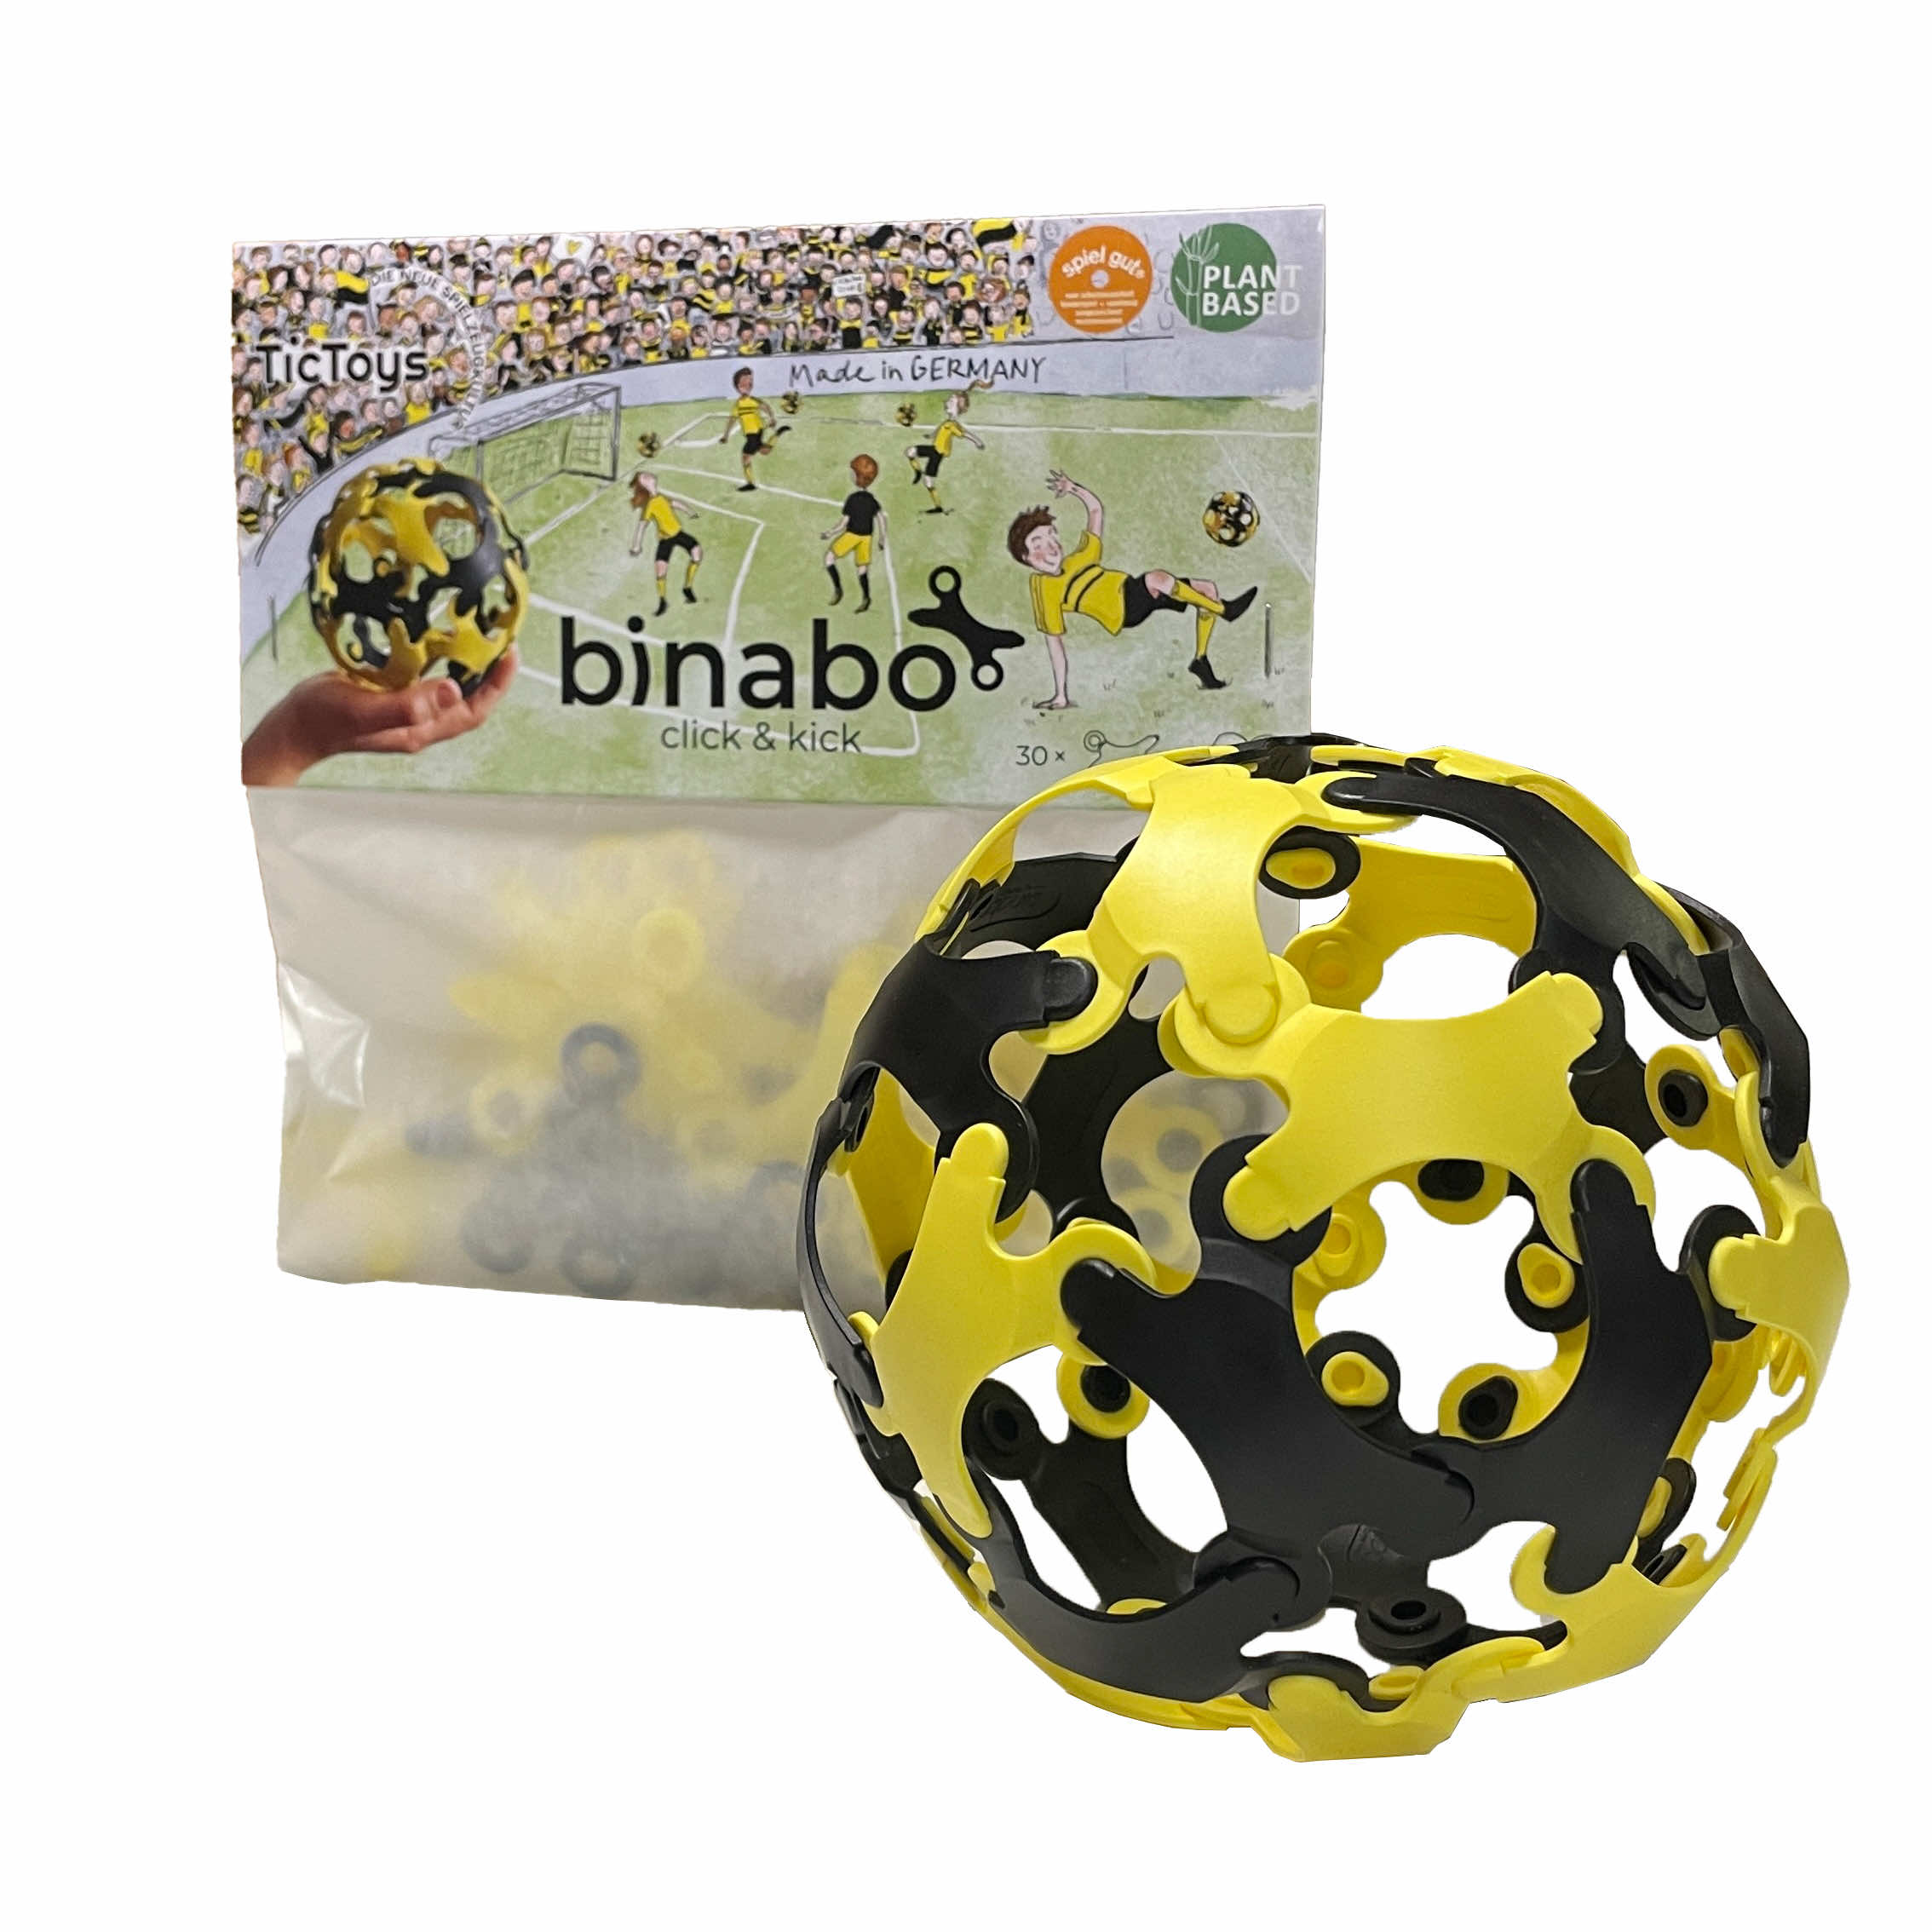 Binabo „click & kick“ gelb & schwarz